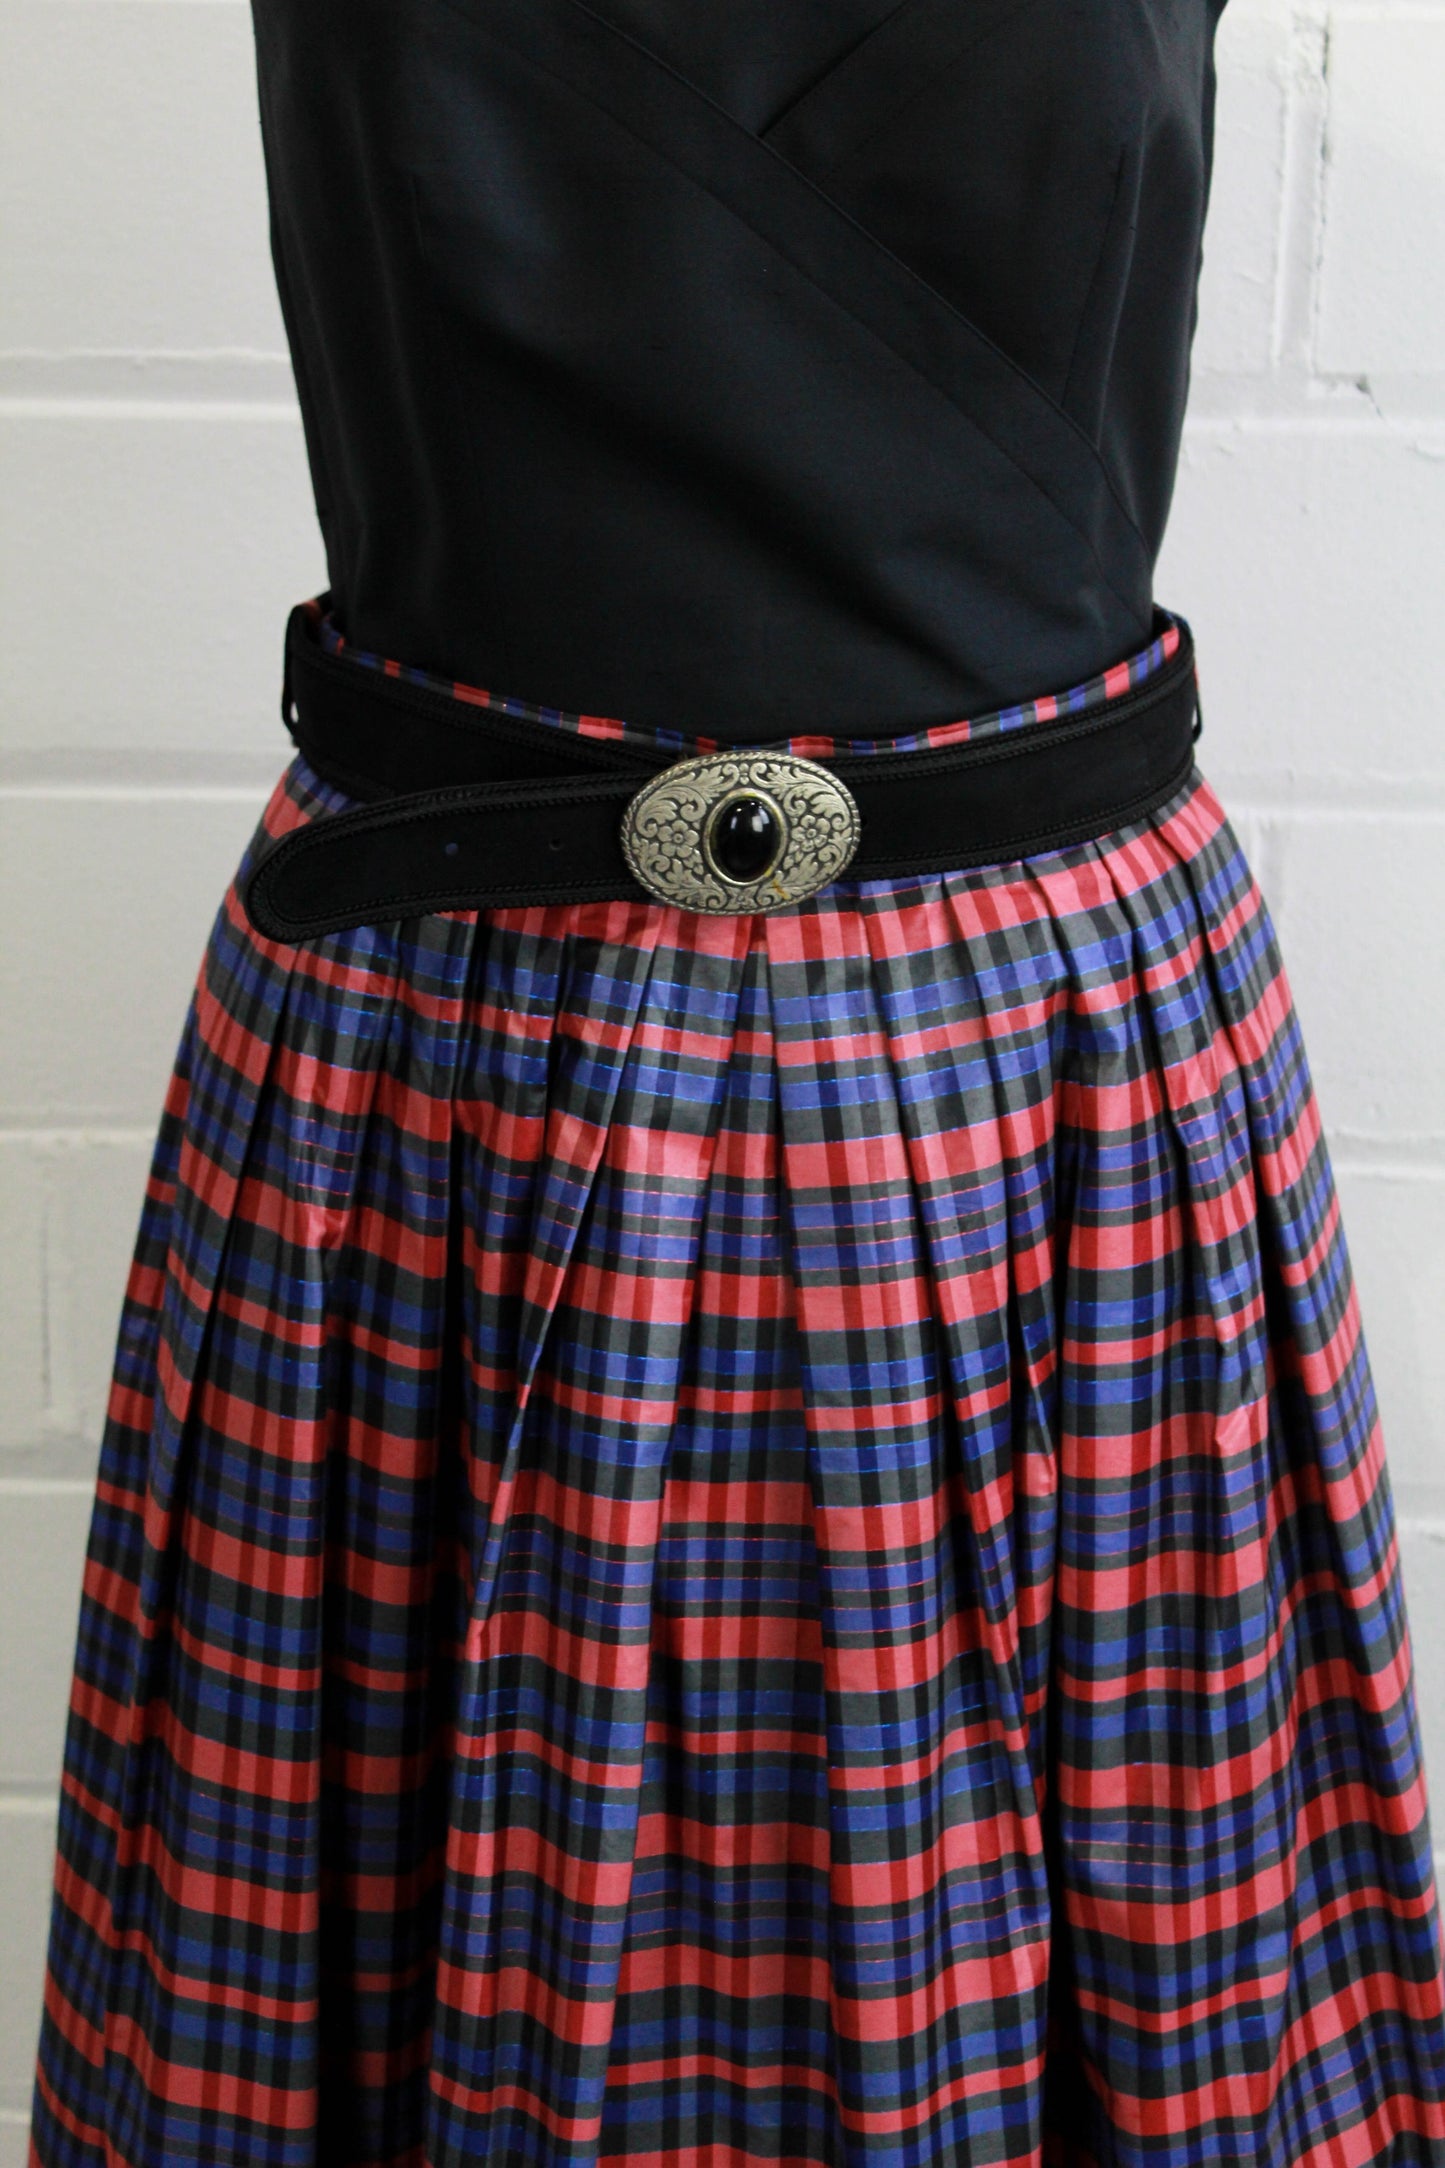 1980s austrian dirndl maxi skirt with belt, blue and red plaid taffeta, pockets